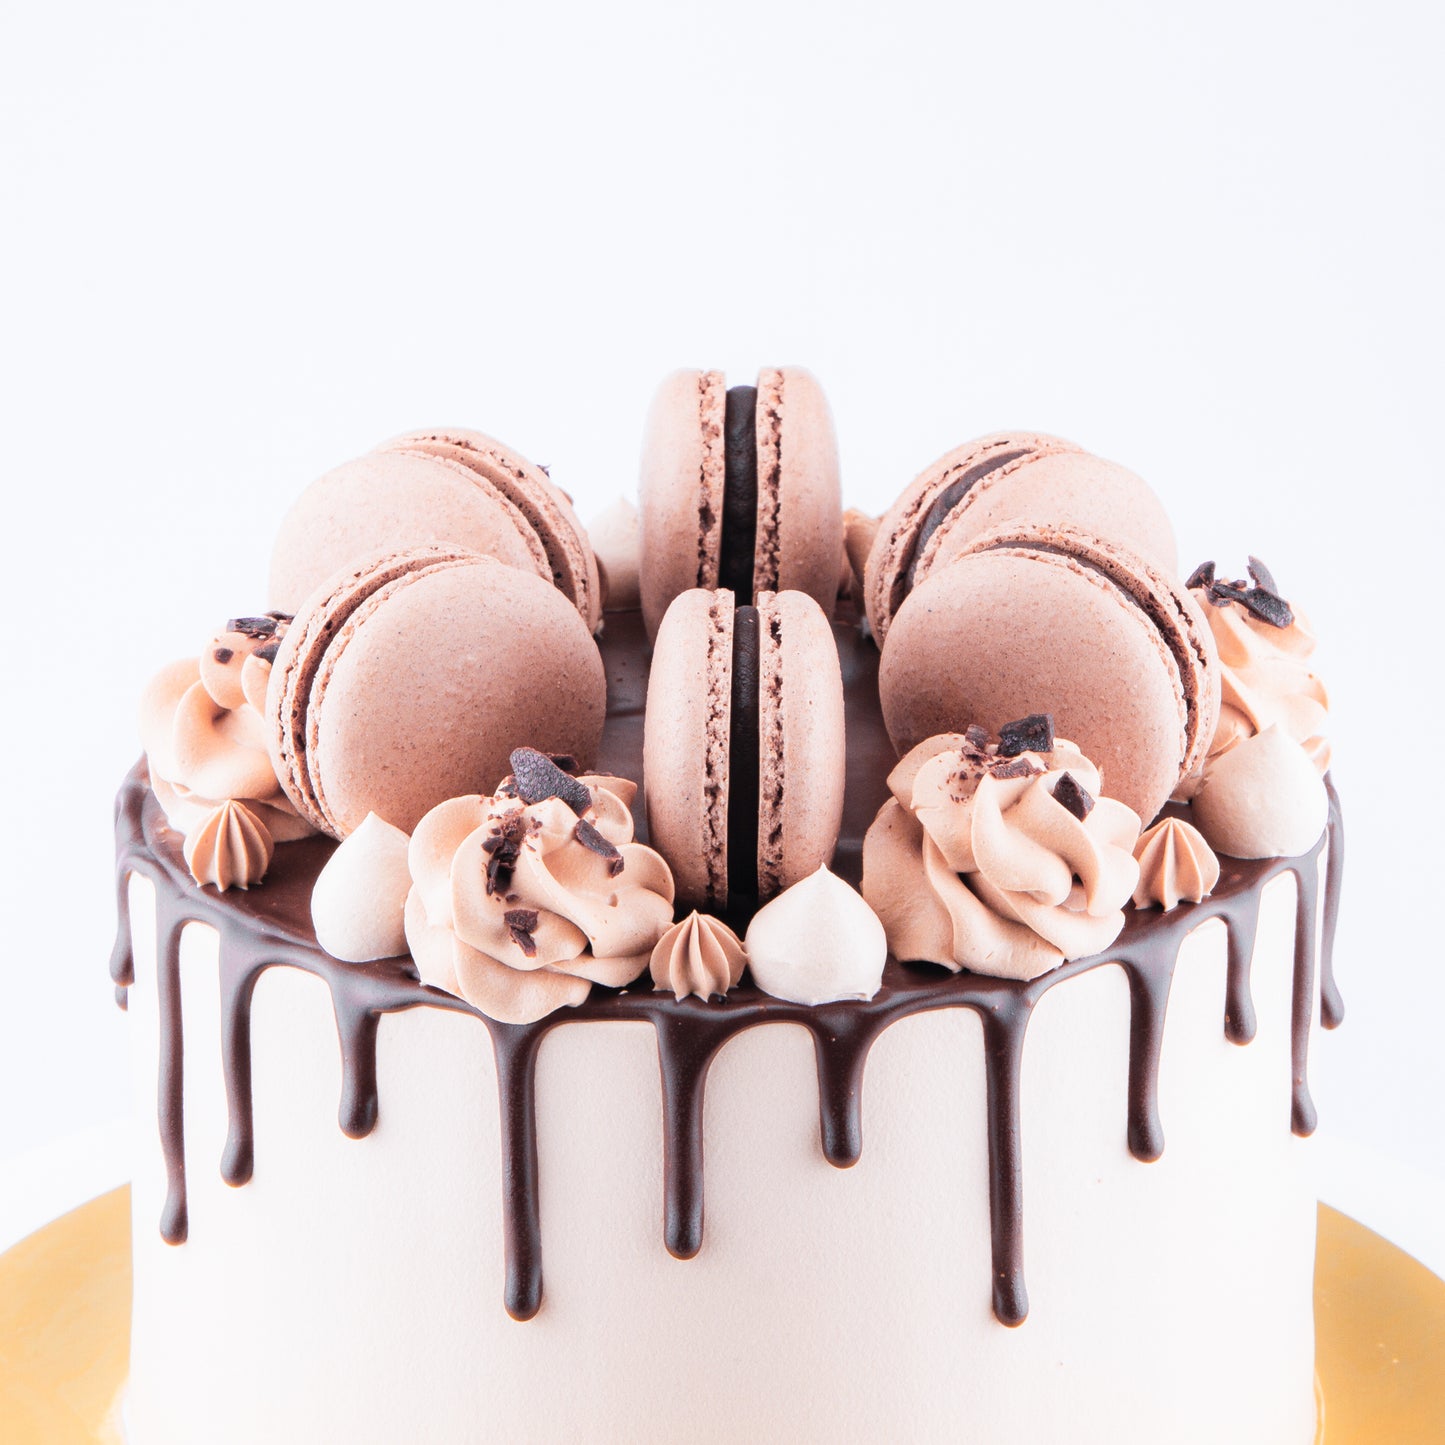 Sales! Chocolate Truffle Cake Upsize (Including  6 pcs macarons)| $65.80 nett only